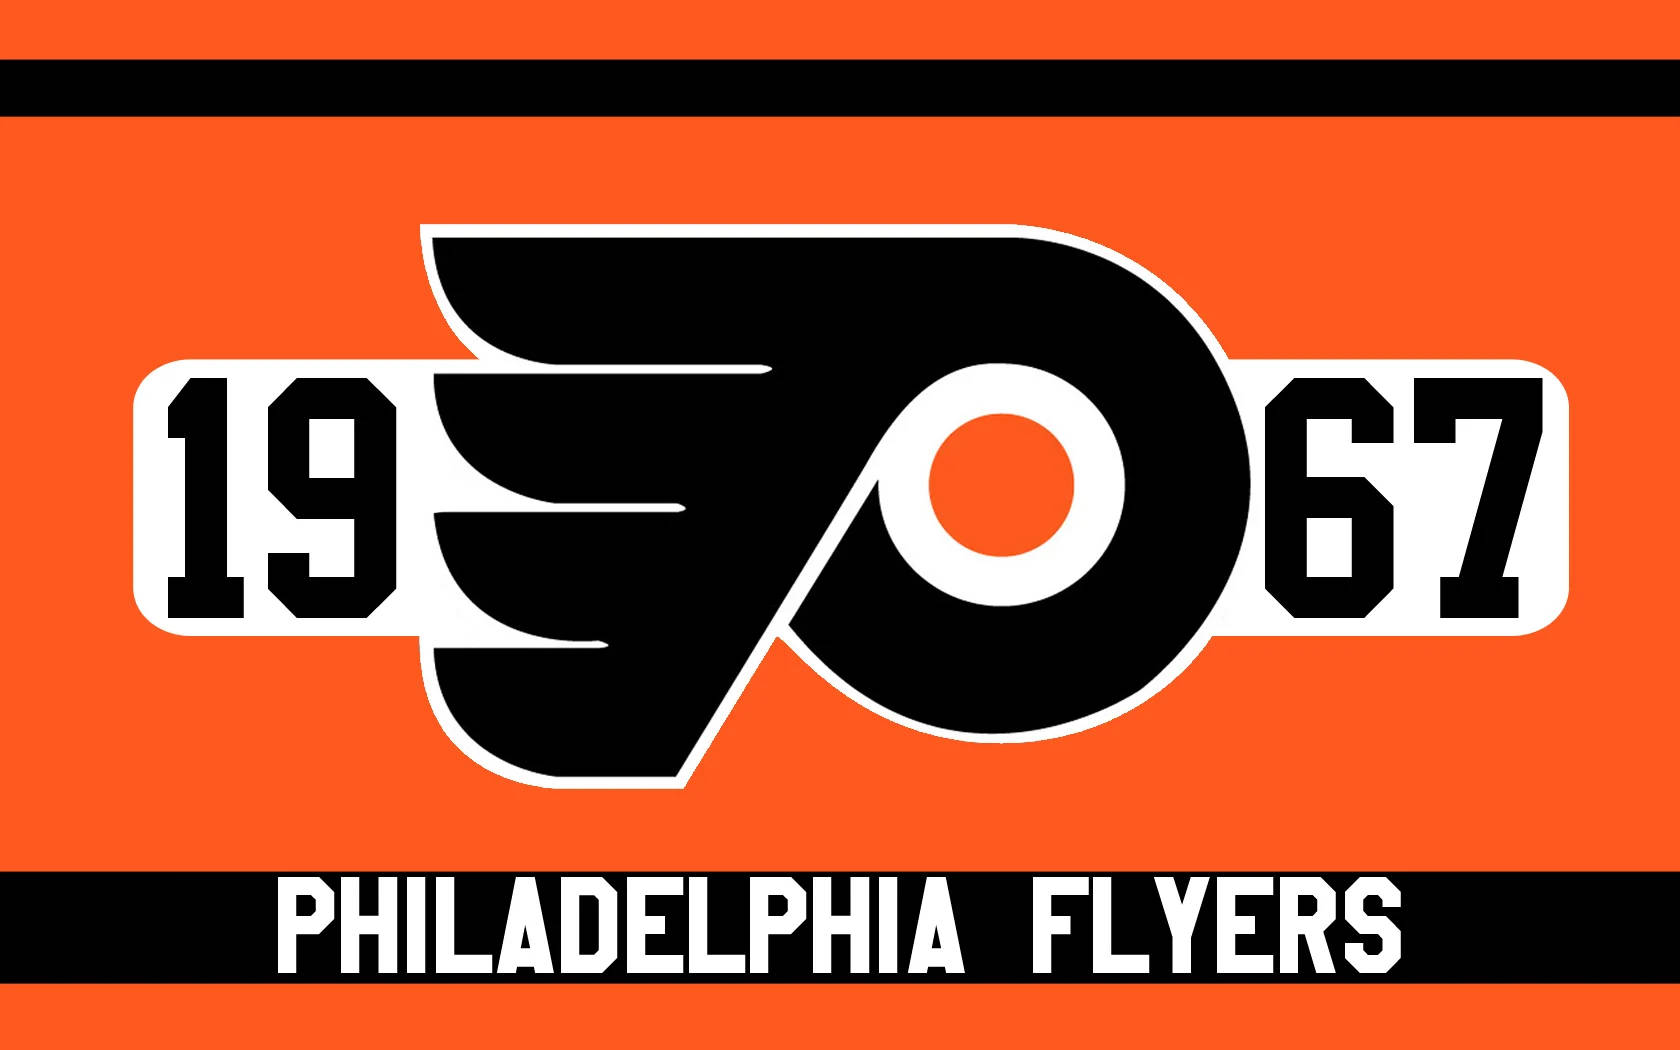 Philadelphia Flyers 1967 Logo - Classic Heritage Background